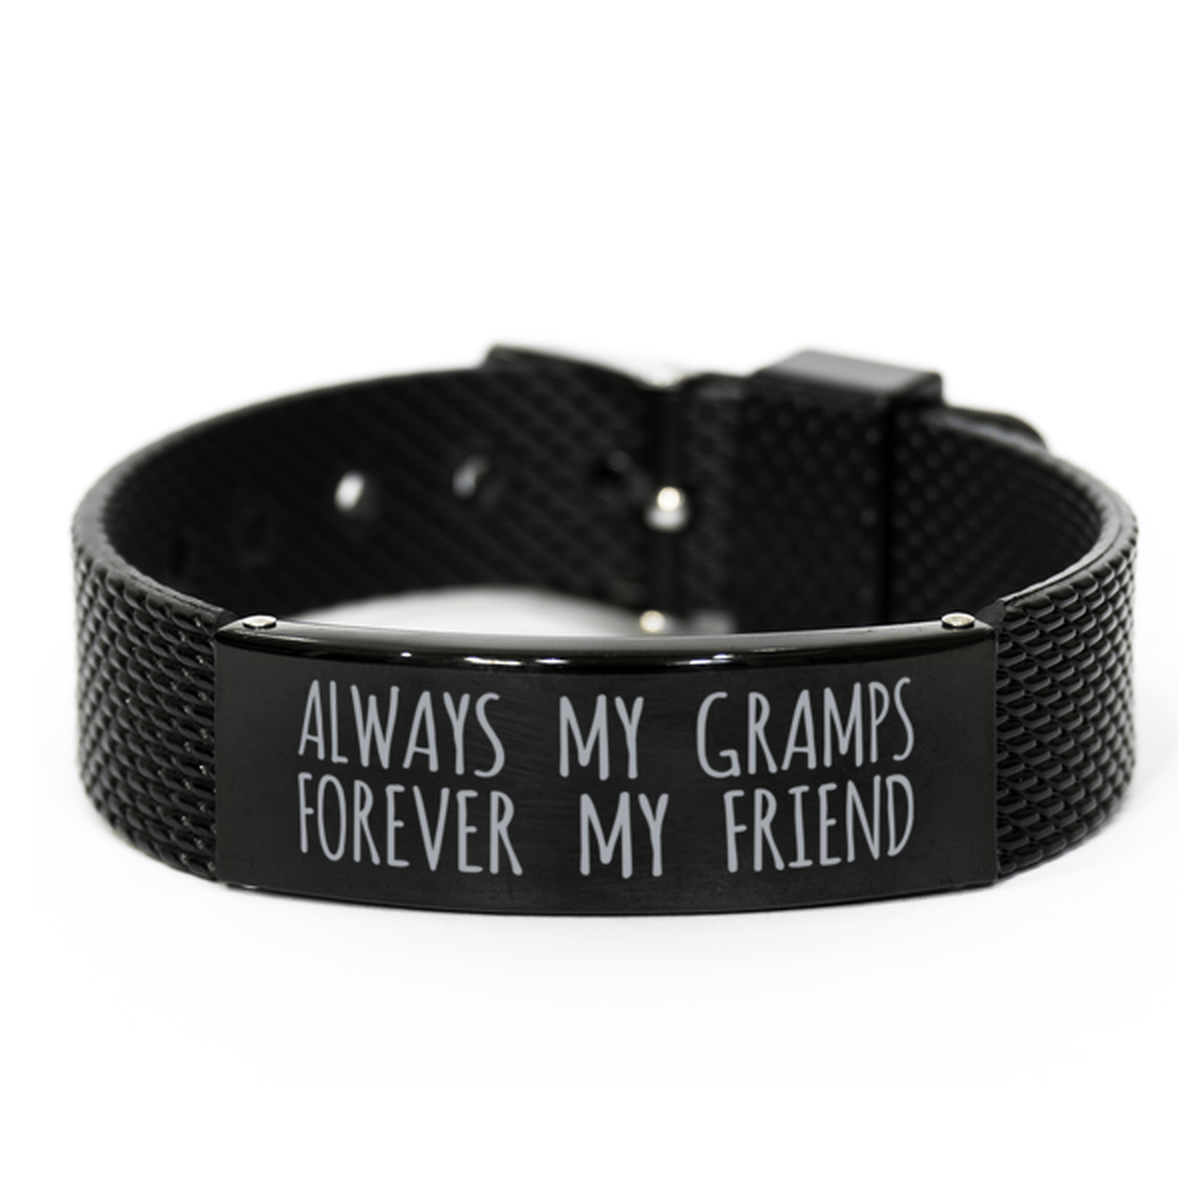 Inspirational Gramps Black Shark Mesh Bracelet, Always My Gramps Forever My Friend, Best Birthday Gifts for Family Friends